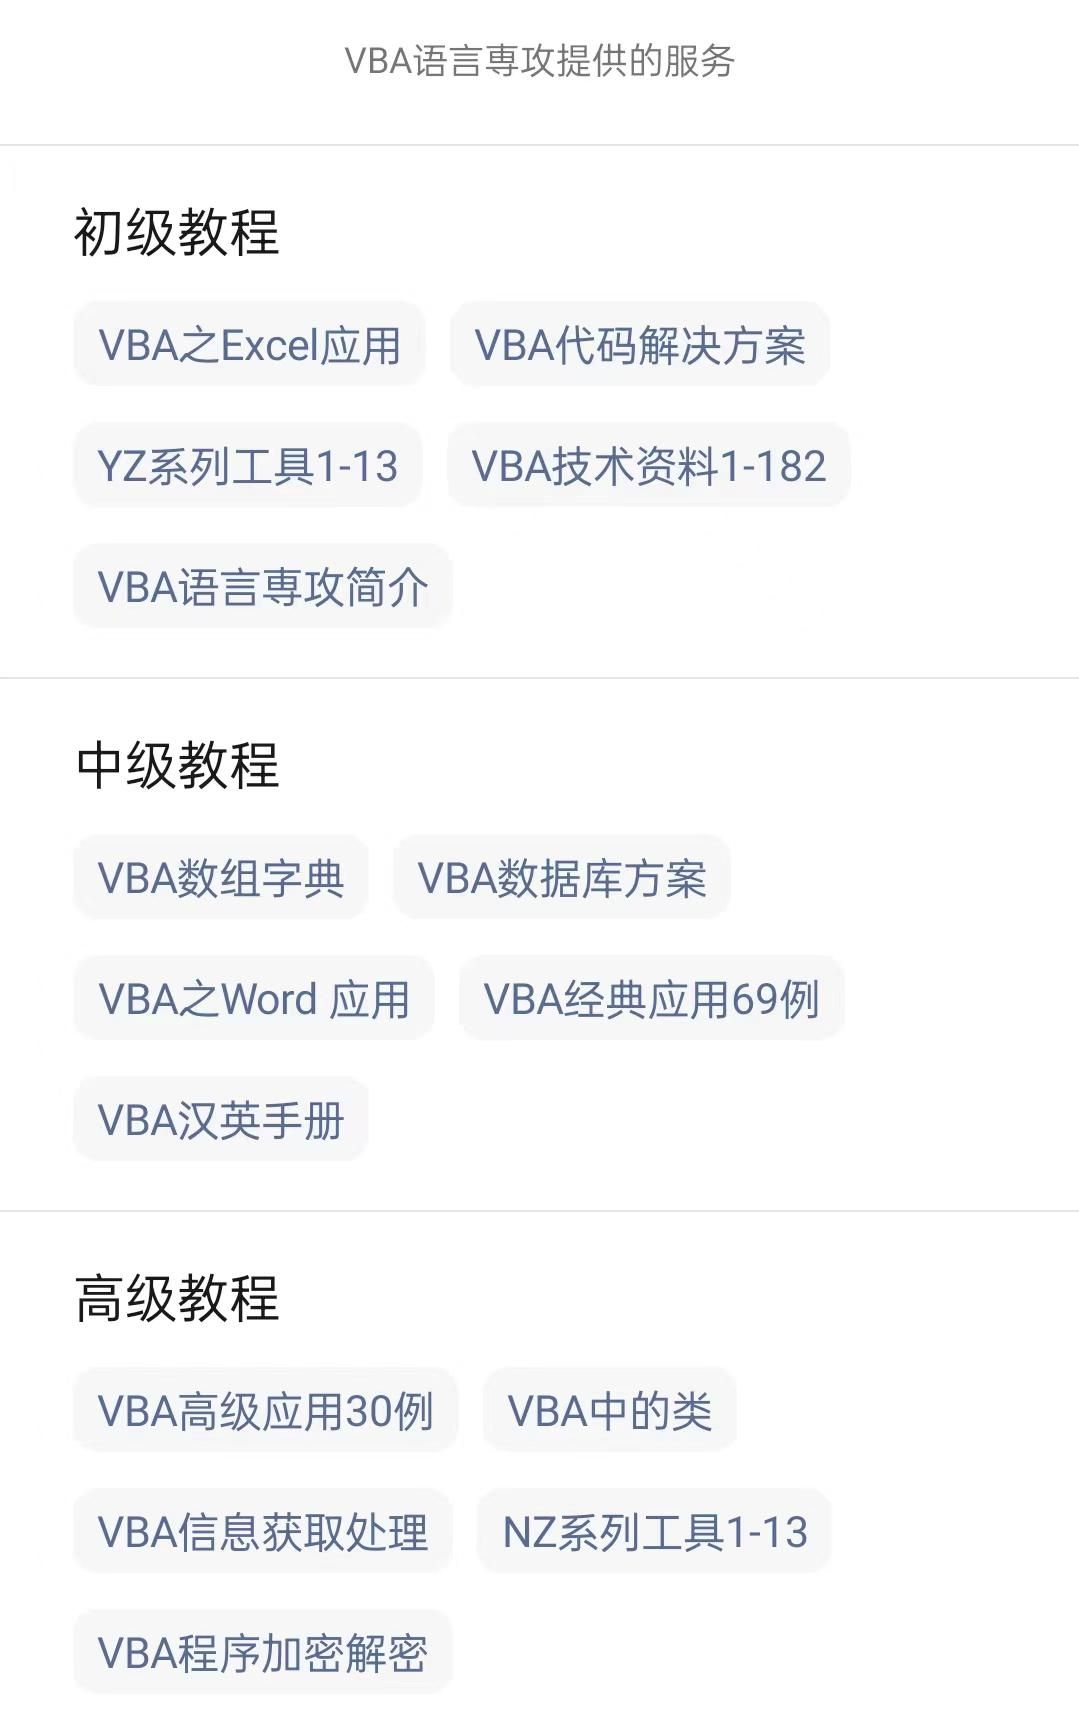 YZ09: VBA_Excel之读心术